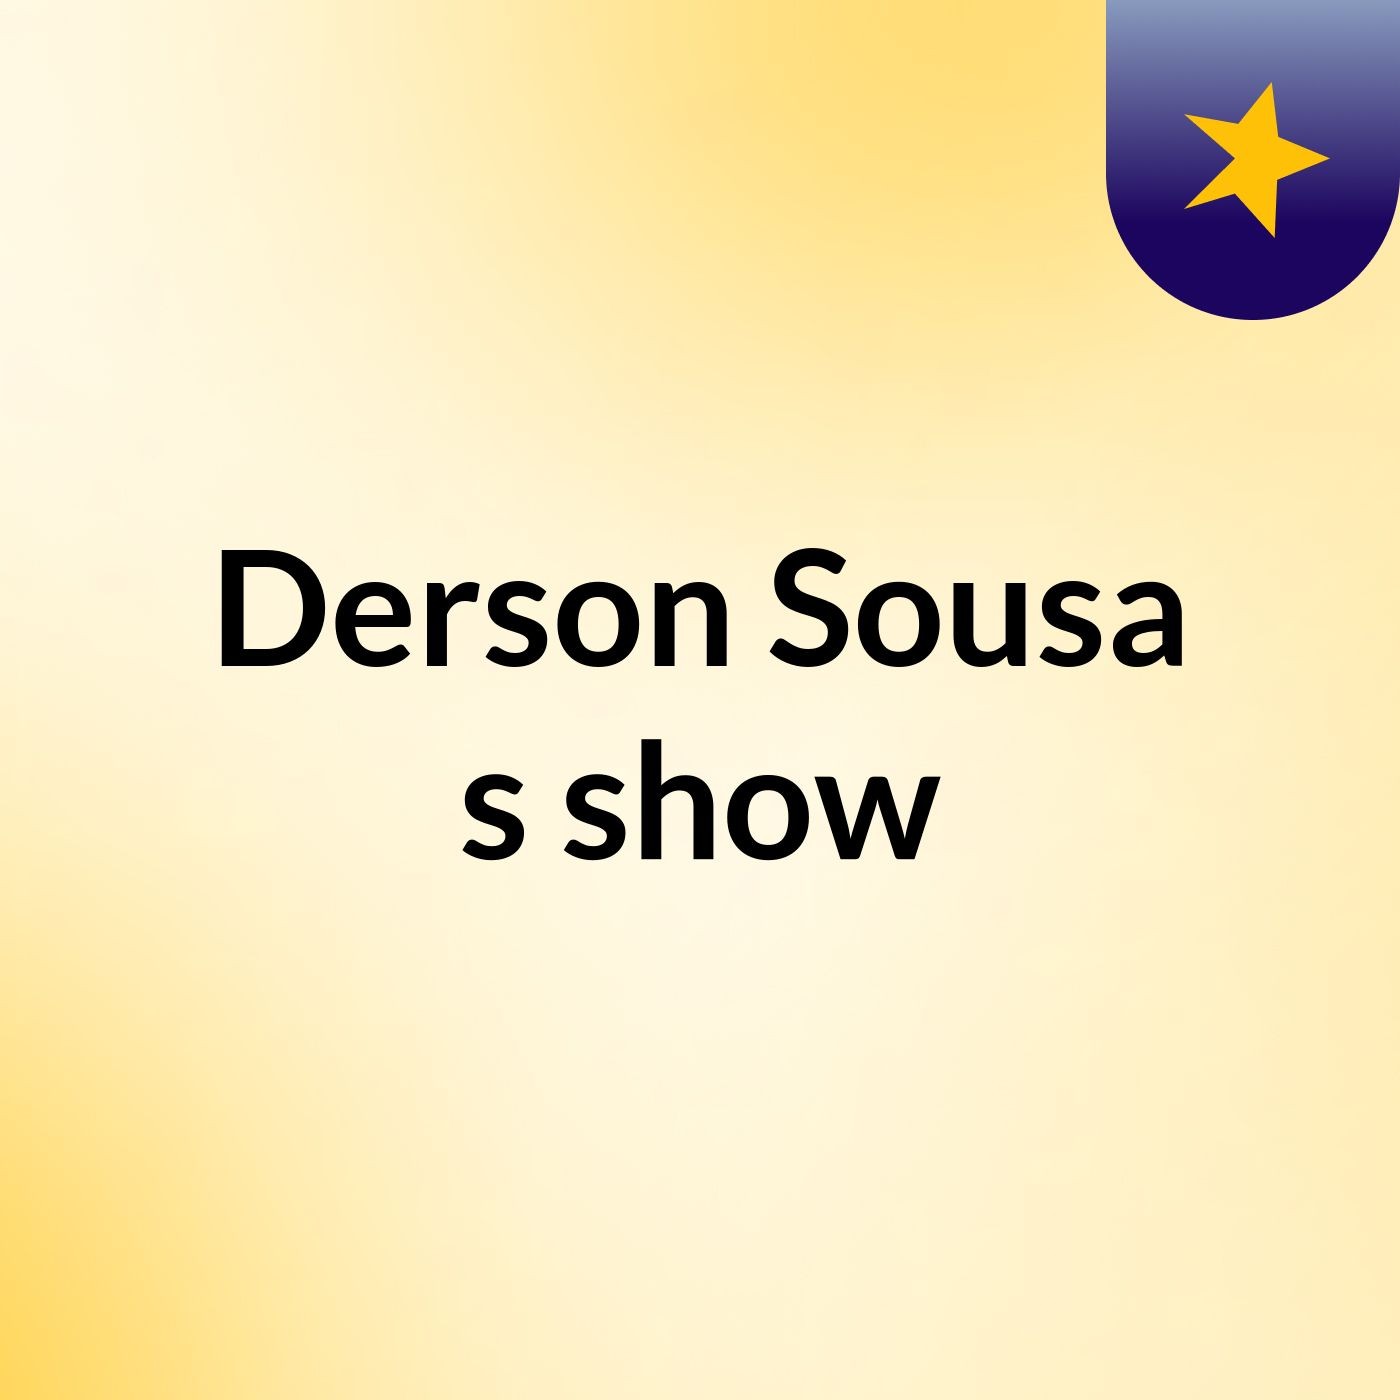 Derson Sousa's show